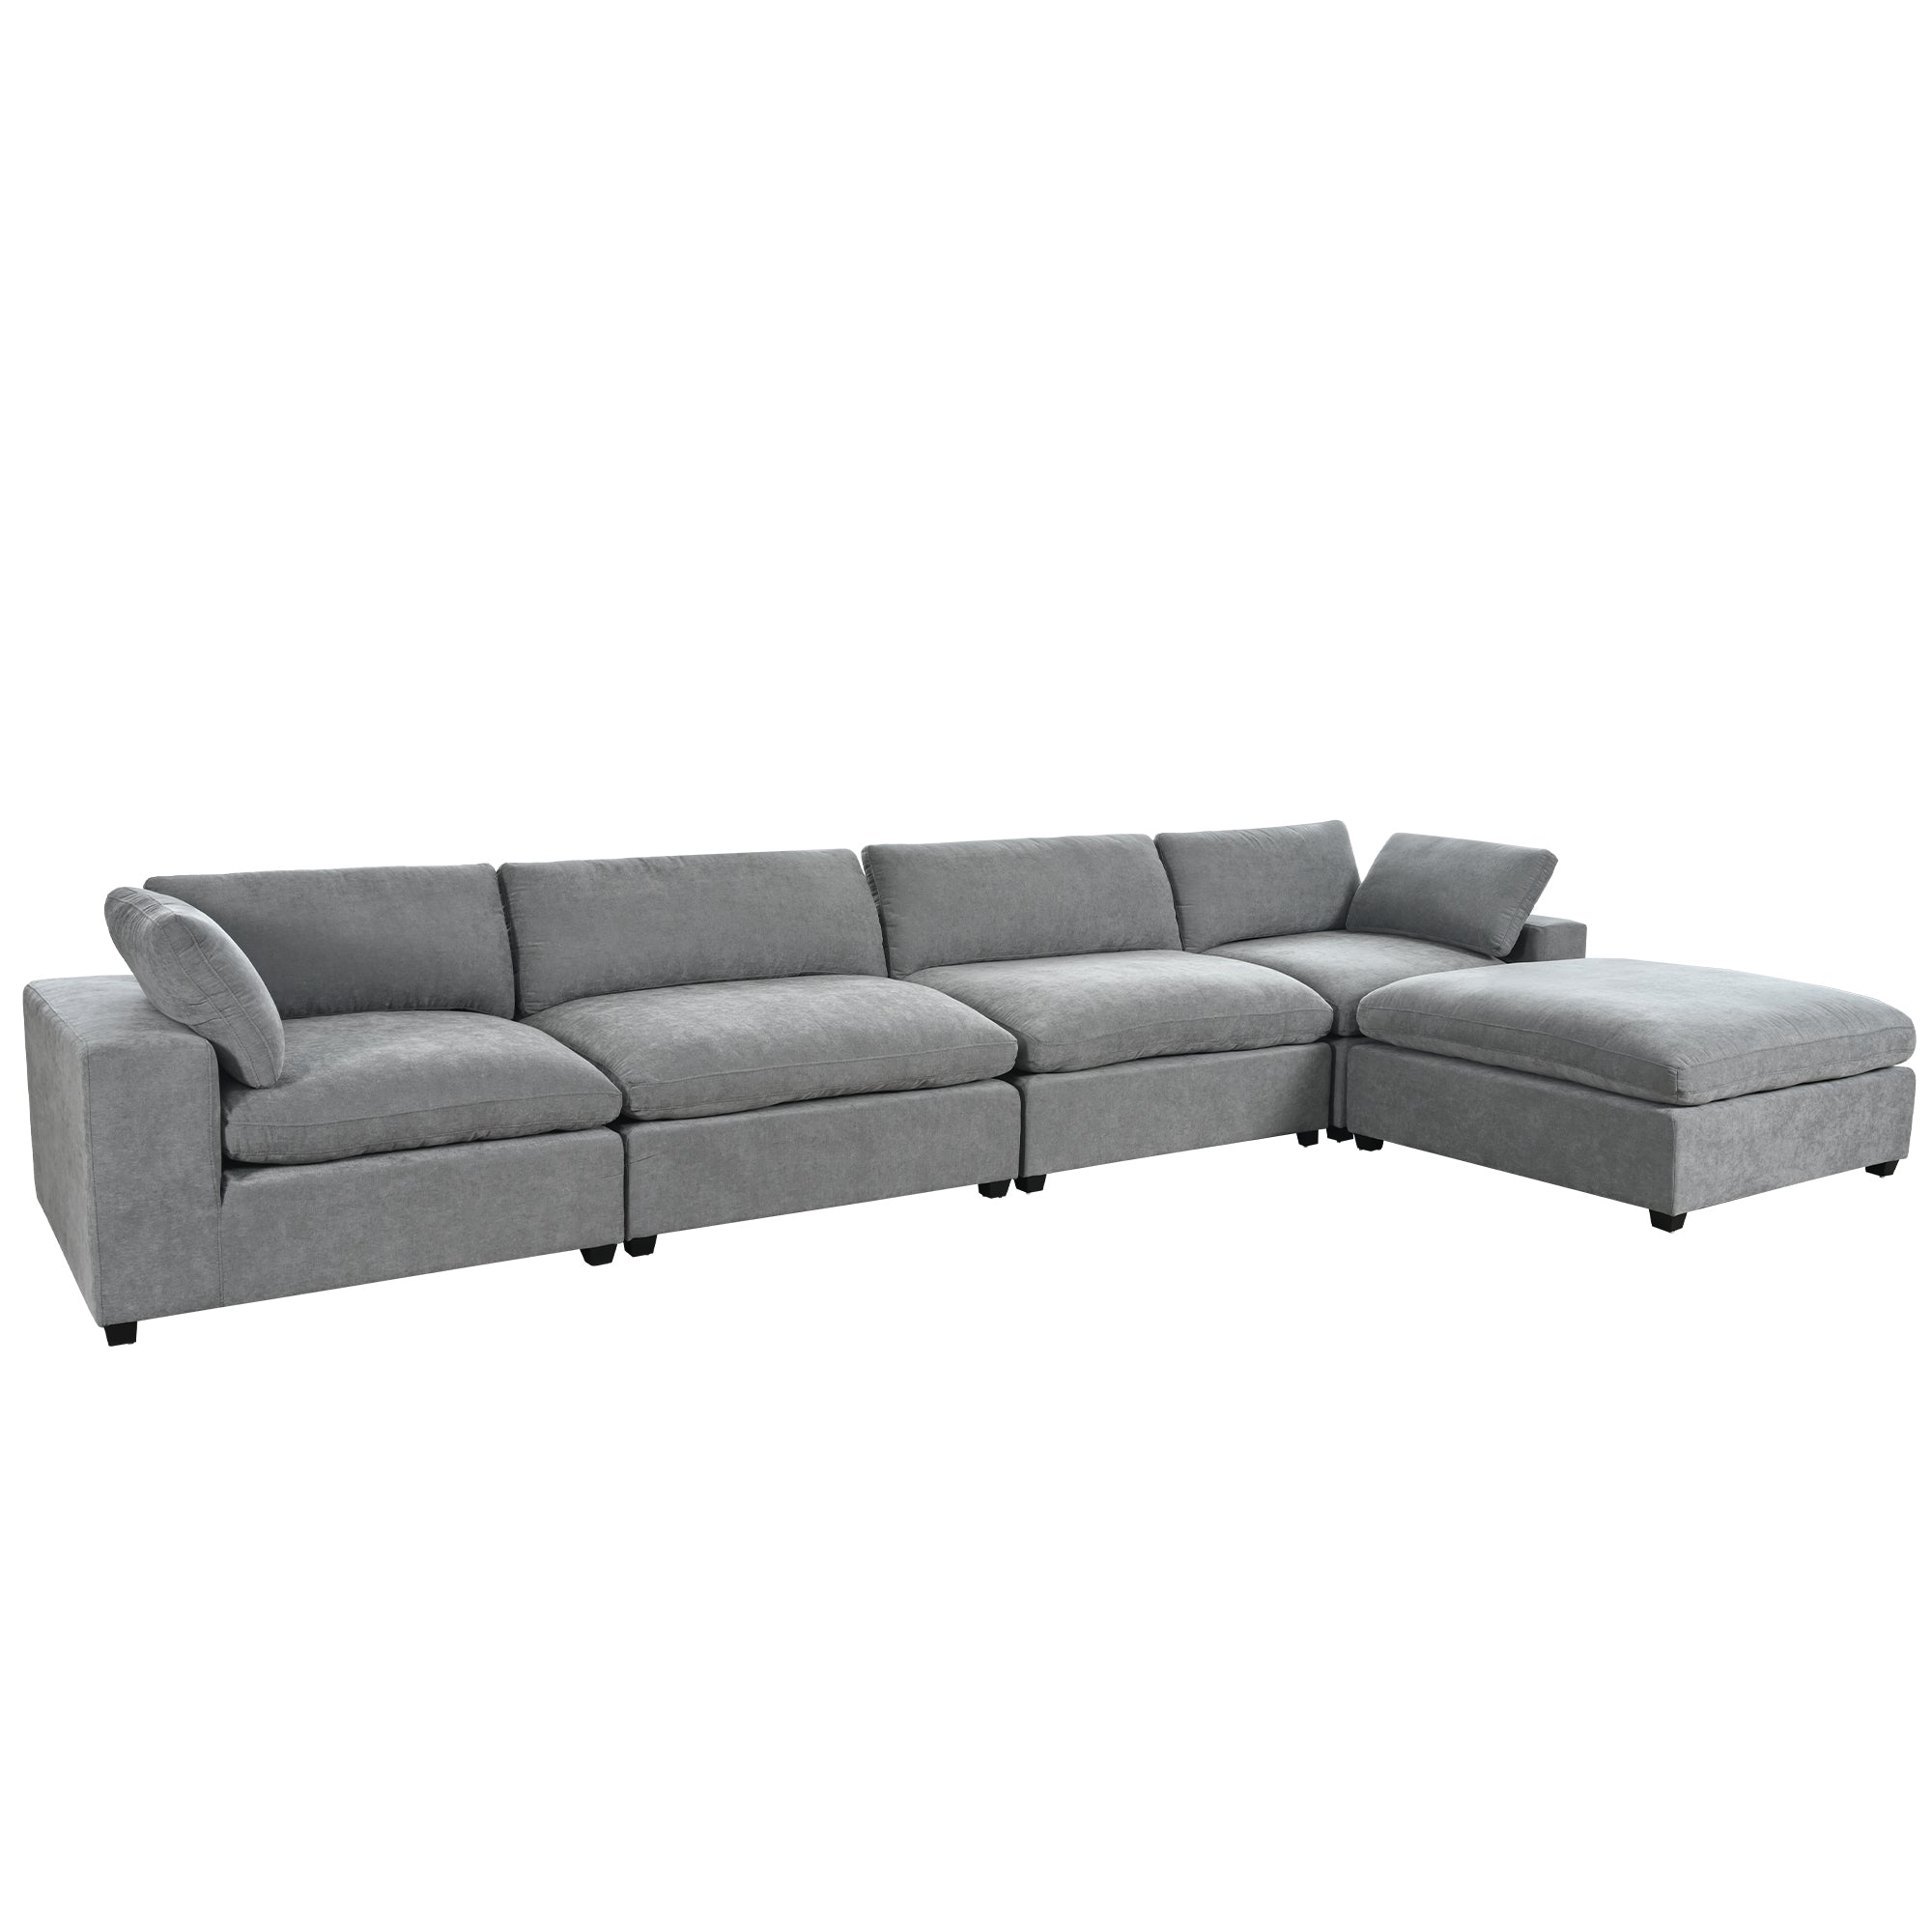 U style Upholstered Oversize Modular Sofa with grey-polyester-5 seat